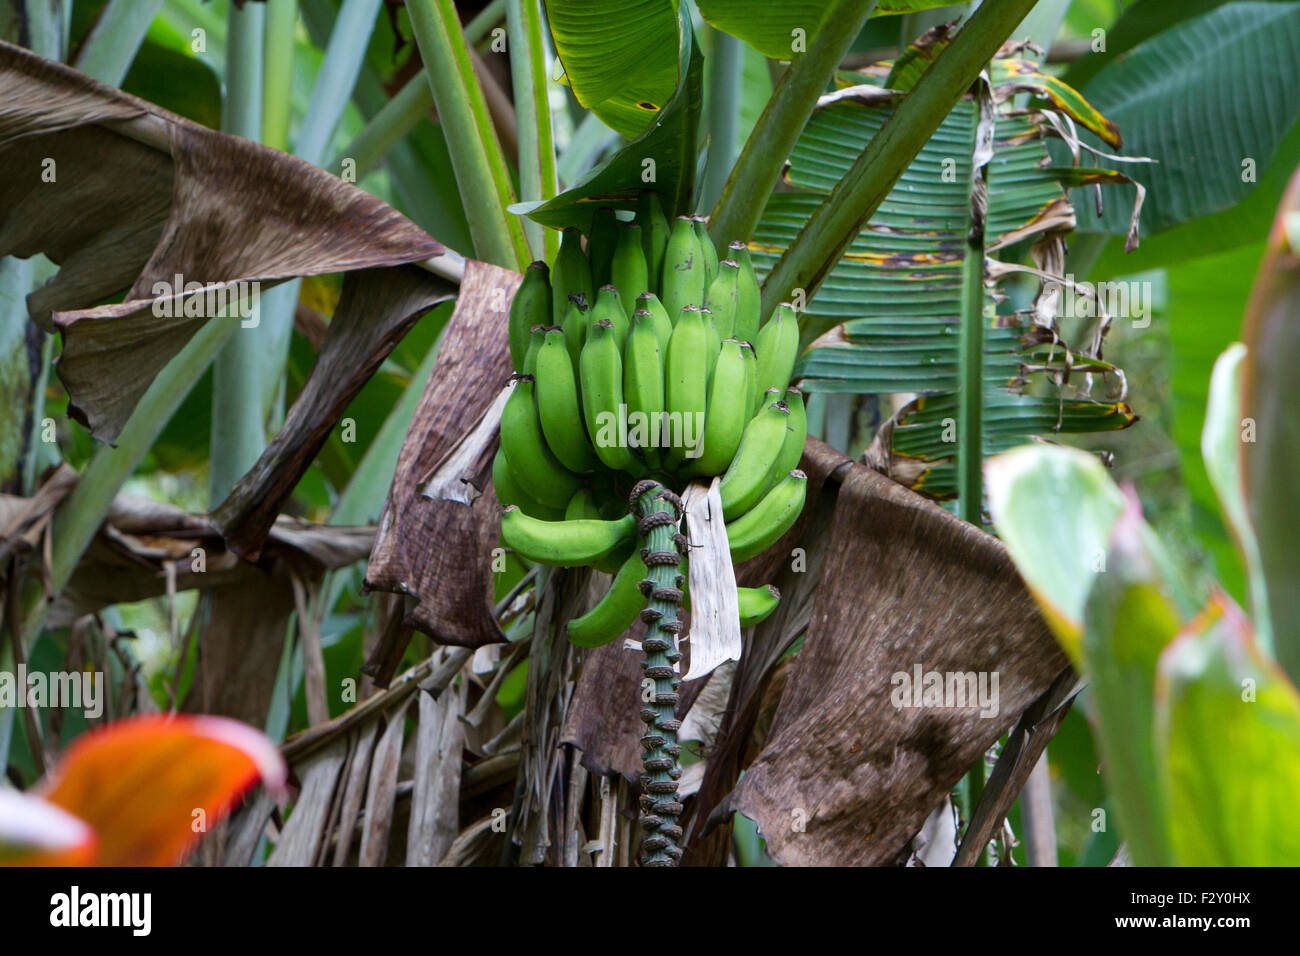 Banana Tree with a large bunch of bananas at Twin Falls, Hana Highway, Maui, Hawaii in August Stock Photo